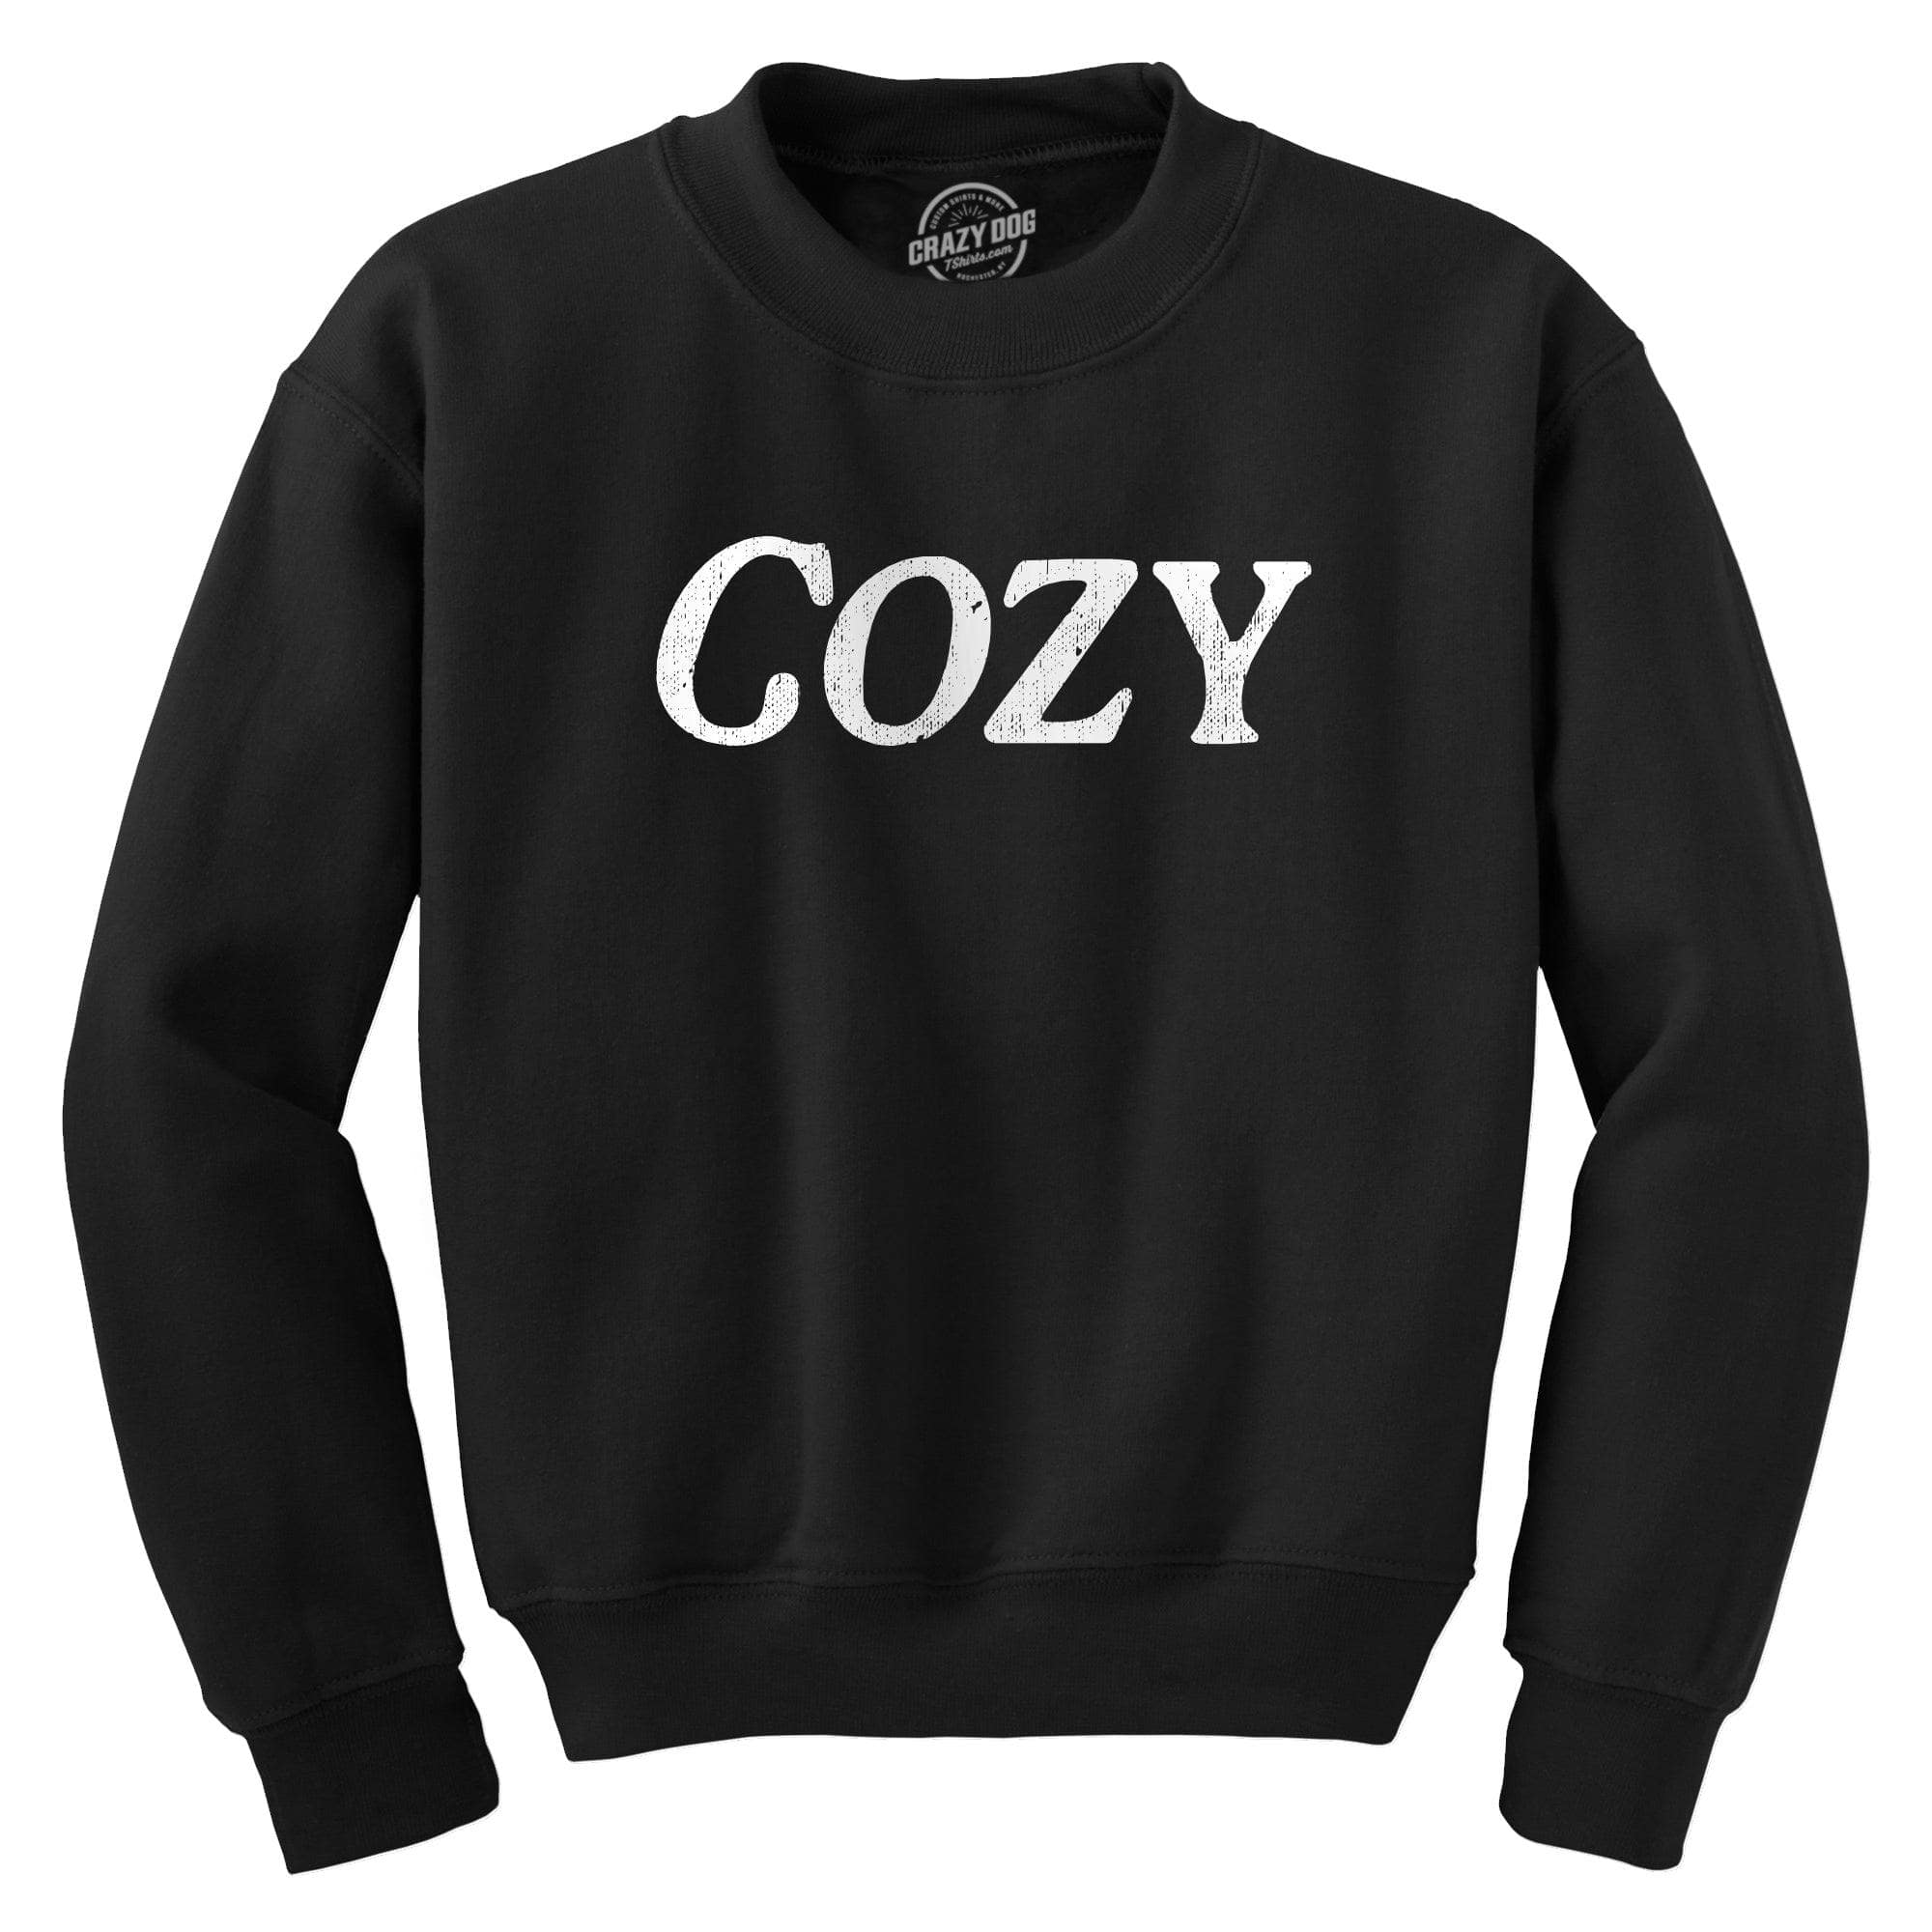 Cozy Crew Neck Sweatshirt  -  Crazy Dog T-Shirts